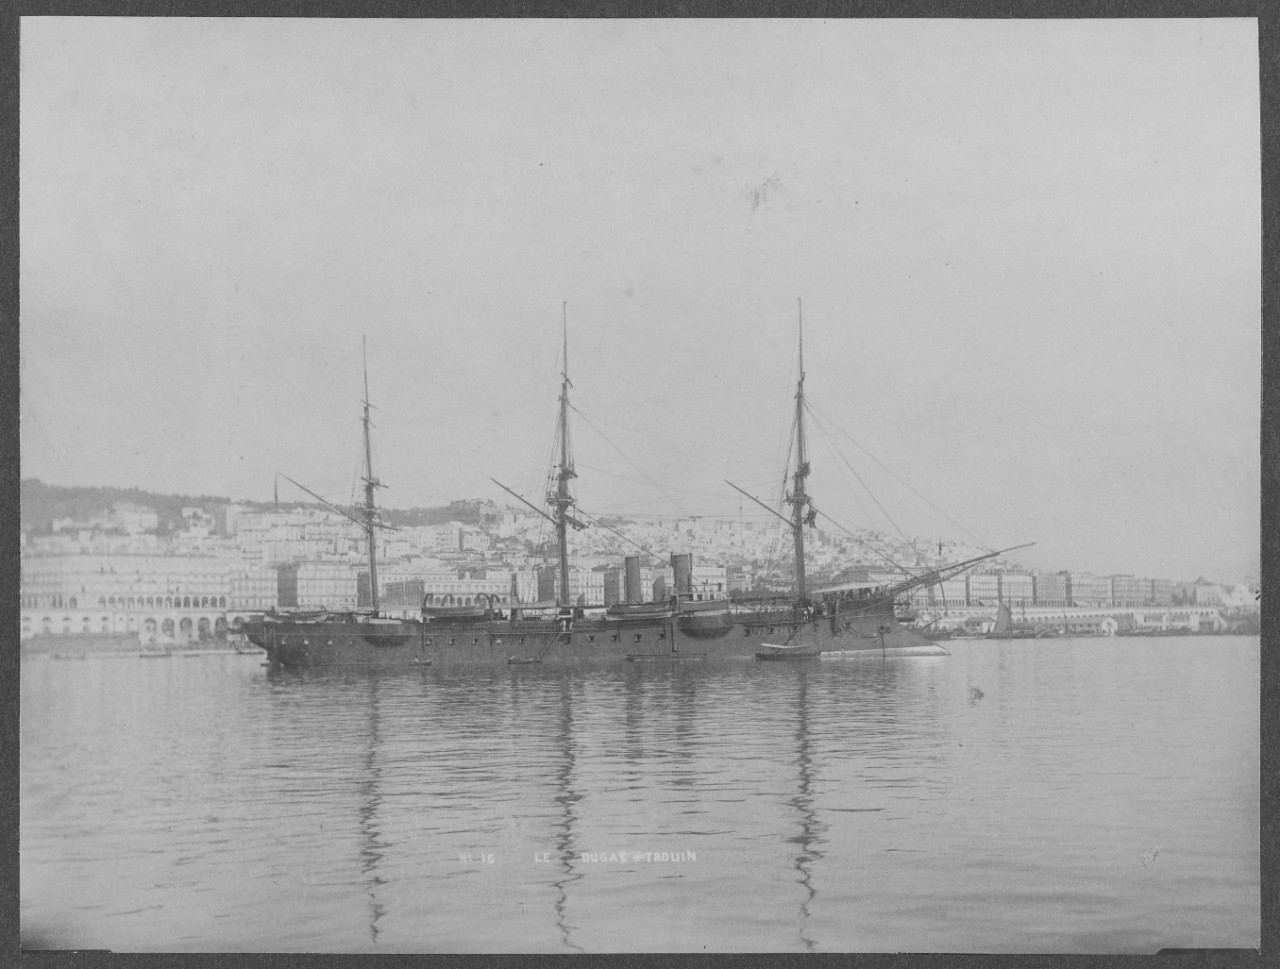 DUGUAY-TROUIN (French cruiser, 1877)